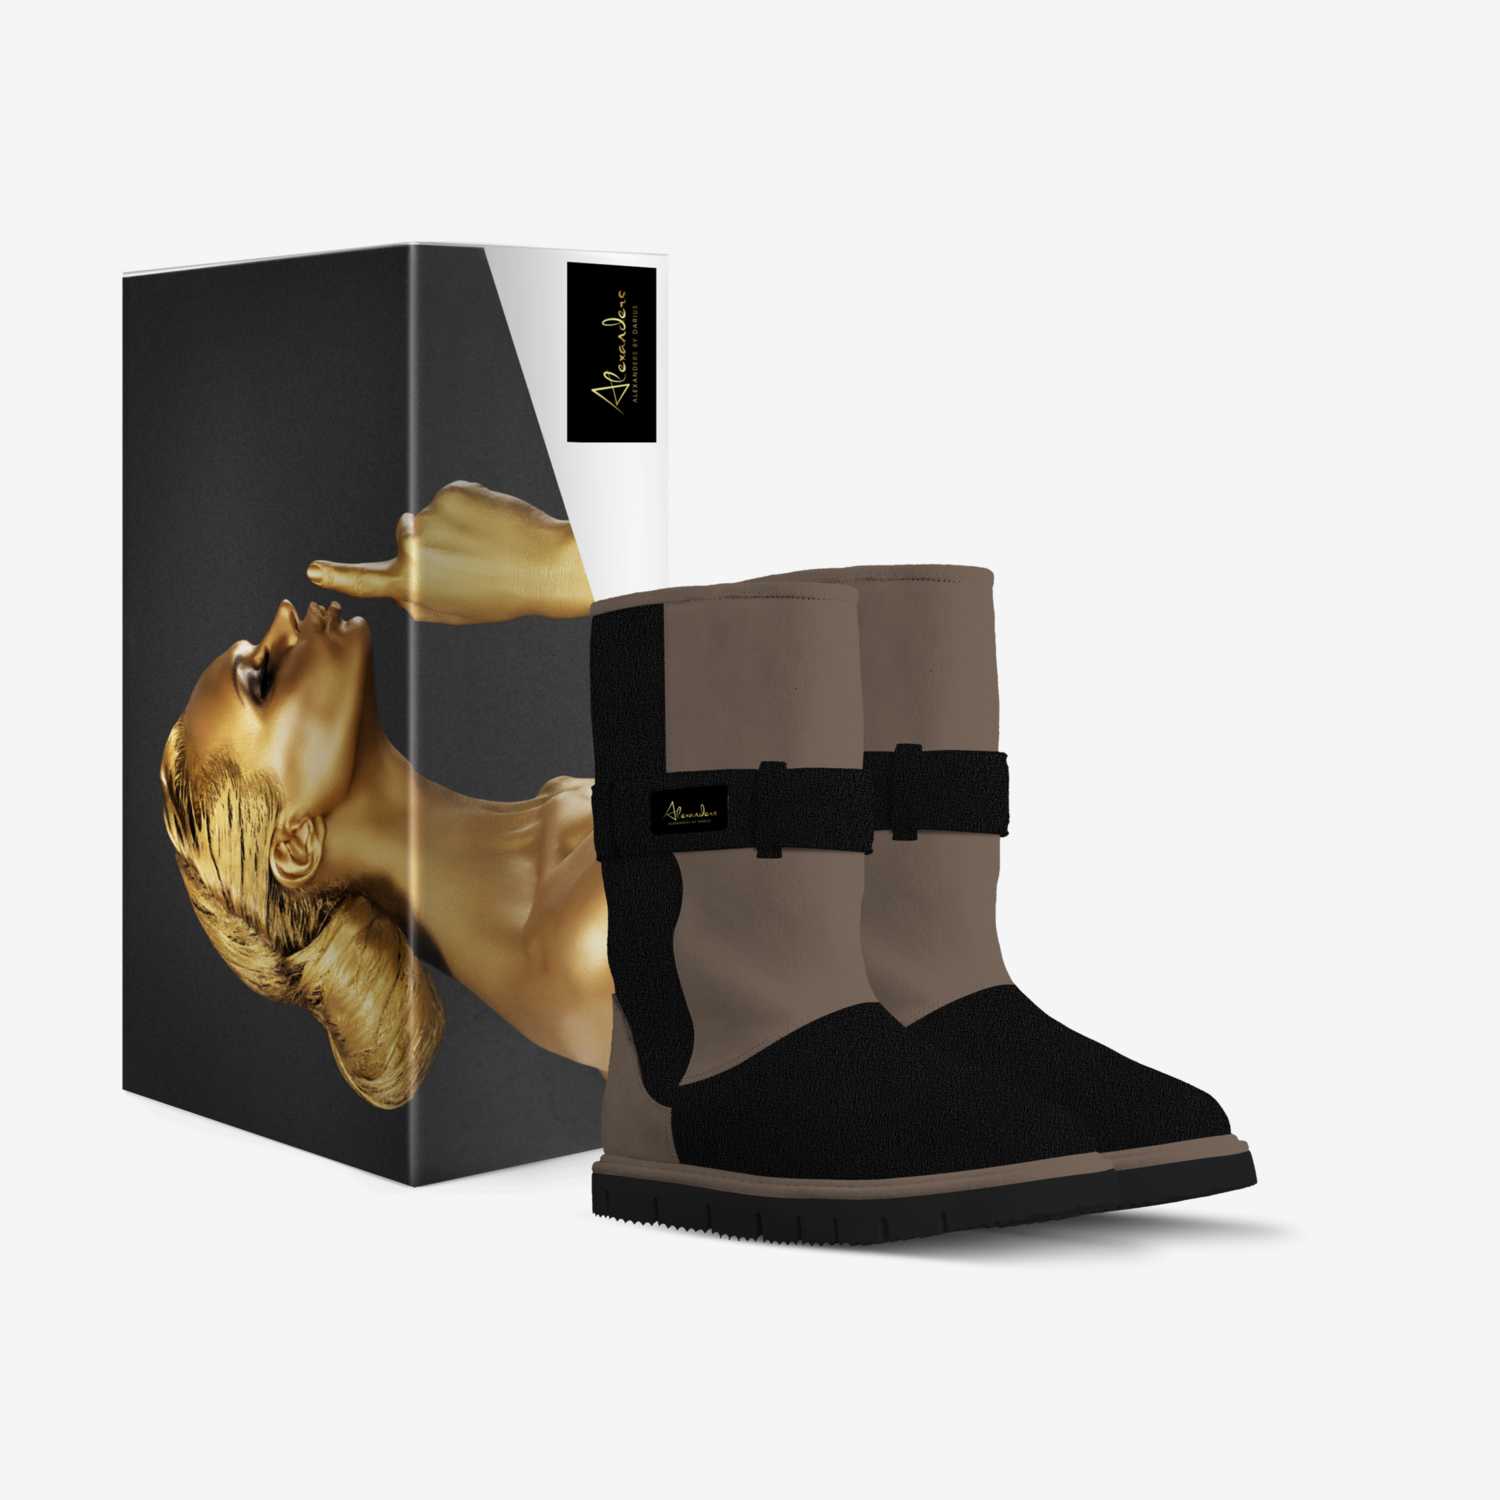 Alexanders custom made in Italy shoes by Darius Alexander | Box view